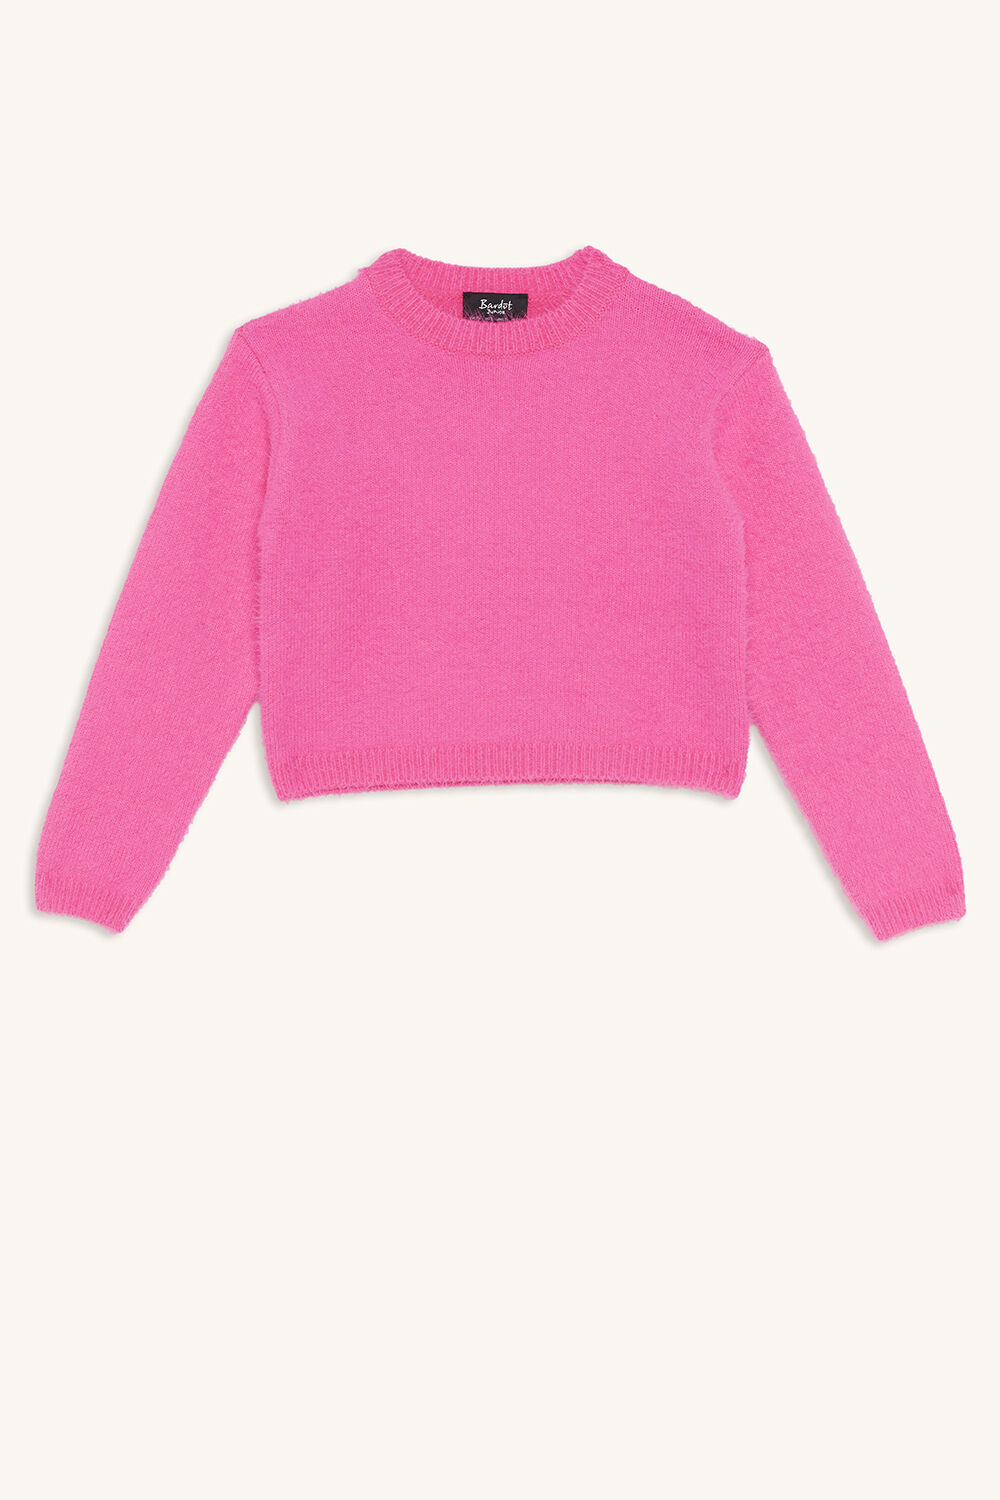 Junior Girl Cropped Fluffy Knit in Neon Pink | Bardot Junior